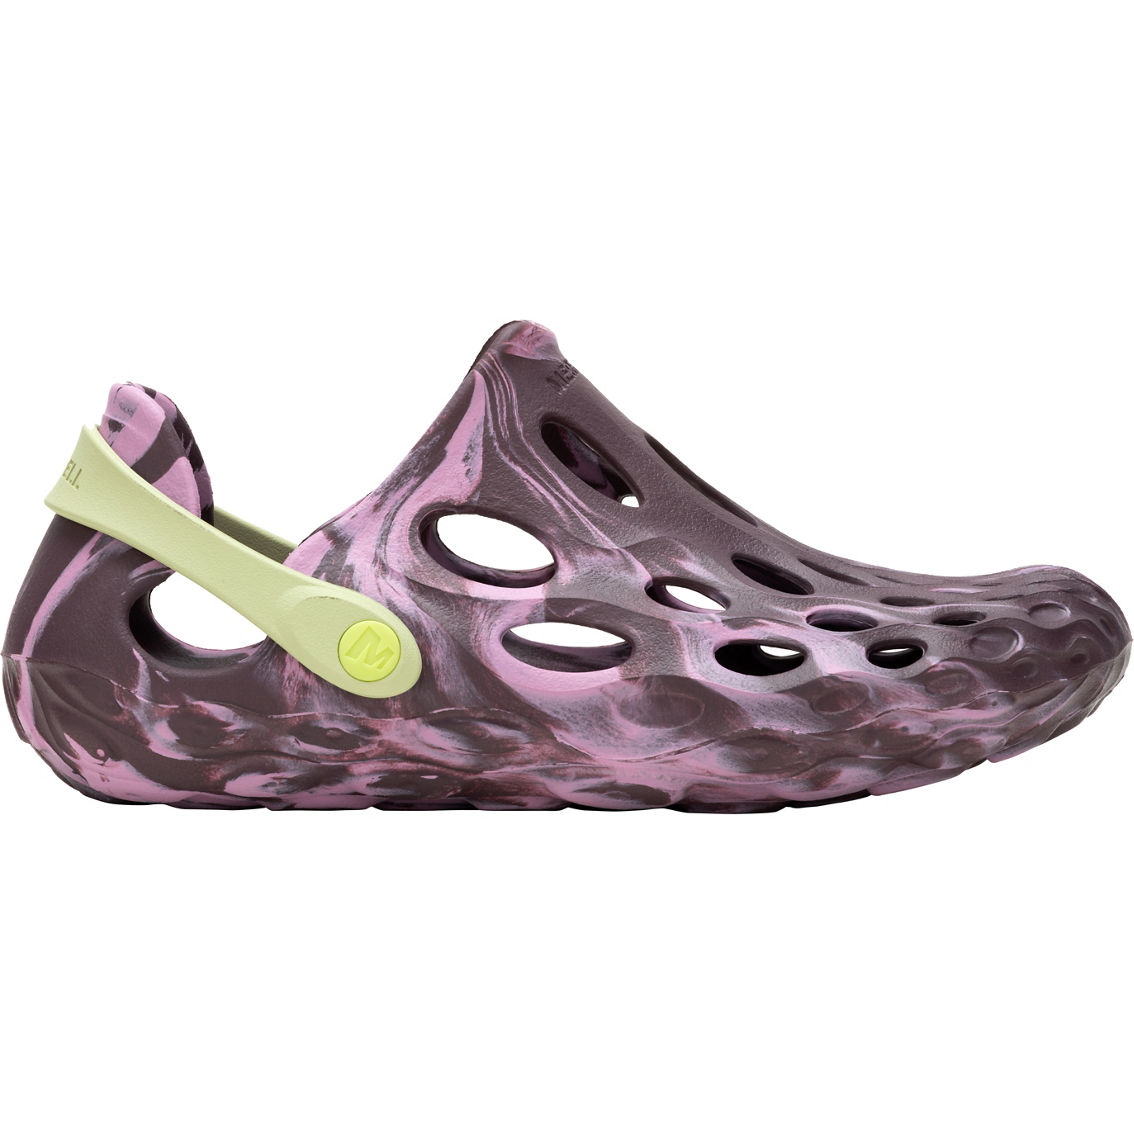 Merrell Women's Hydro Moc Plumwine Shoes - Image 2 of 6